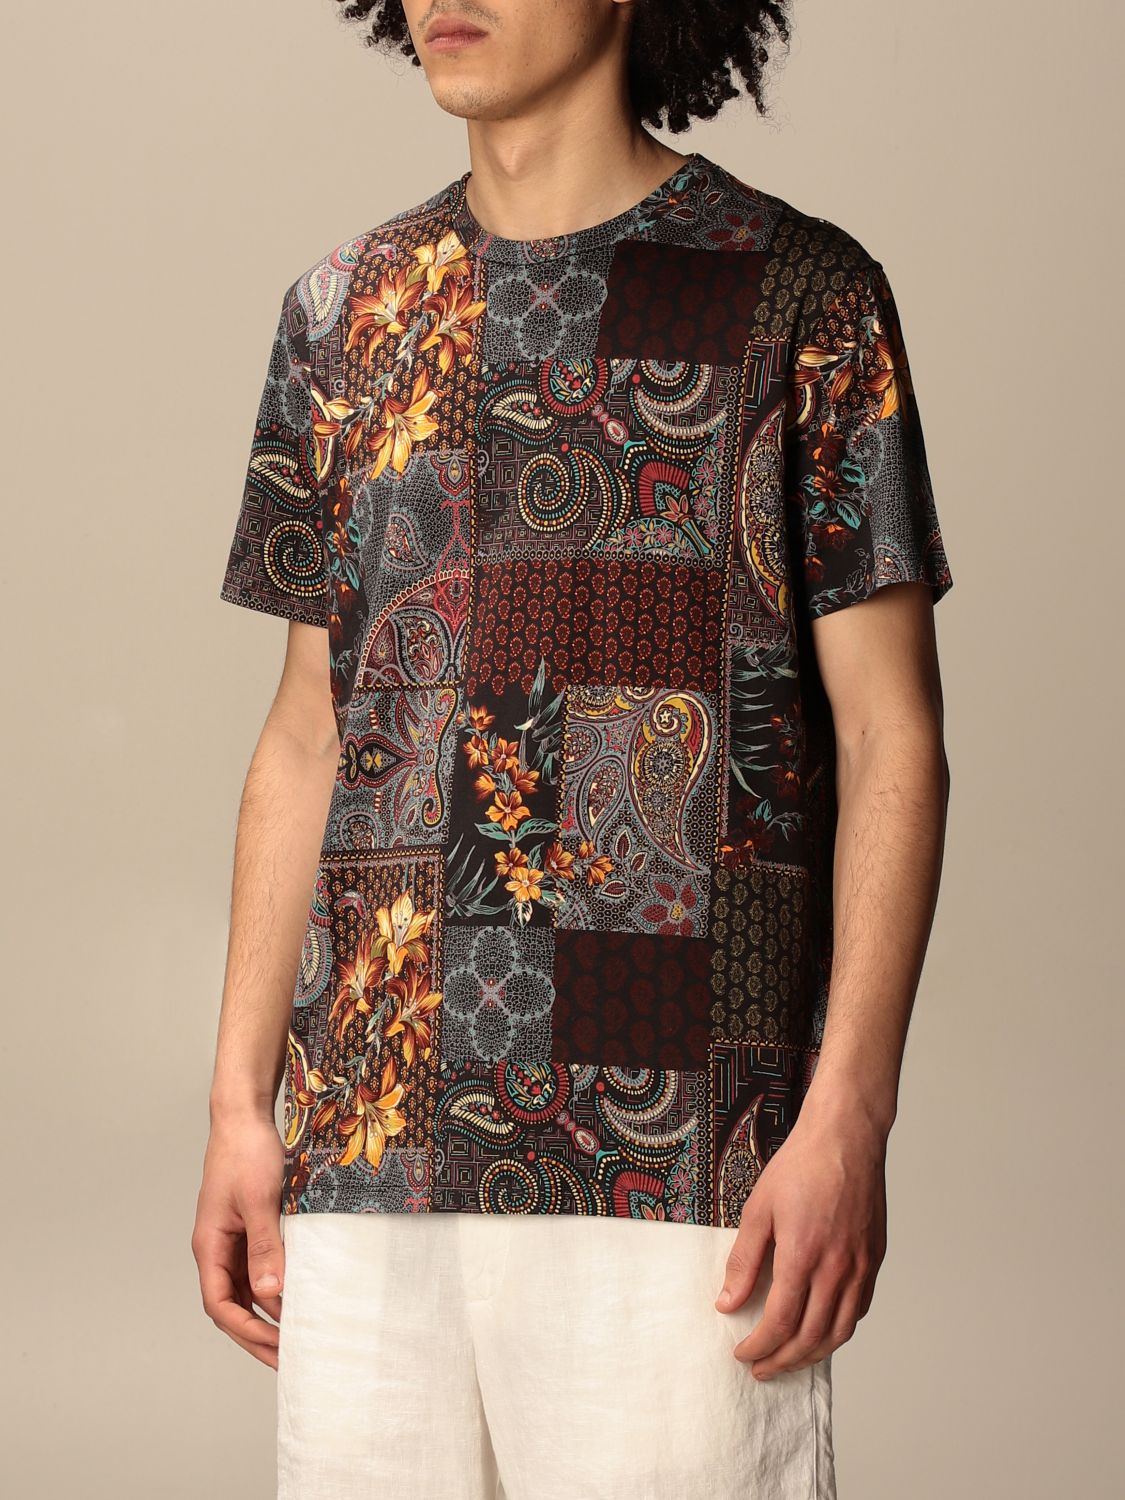 ETRO: T-shirt in printed cotton - Multicolor | Etro t-shirt 1Y020 4103 ...